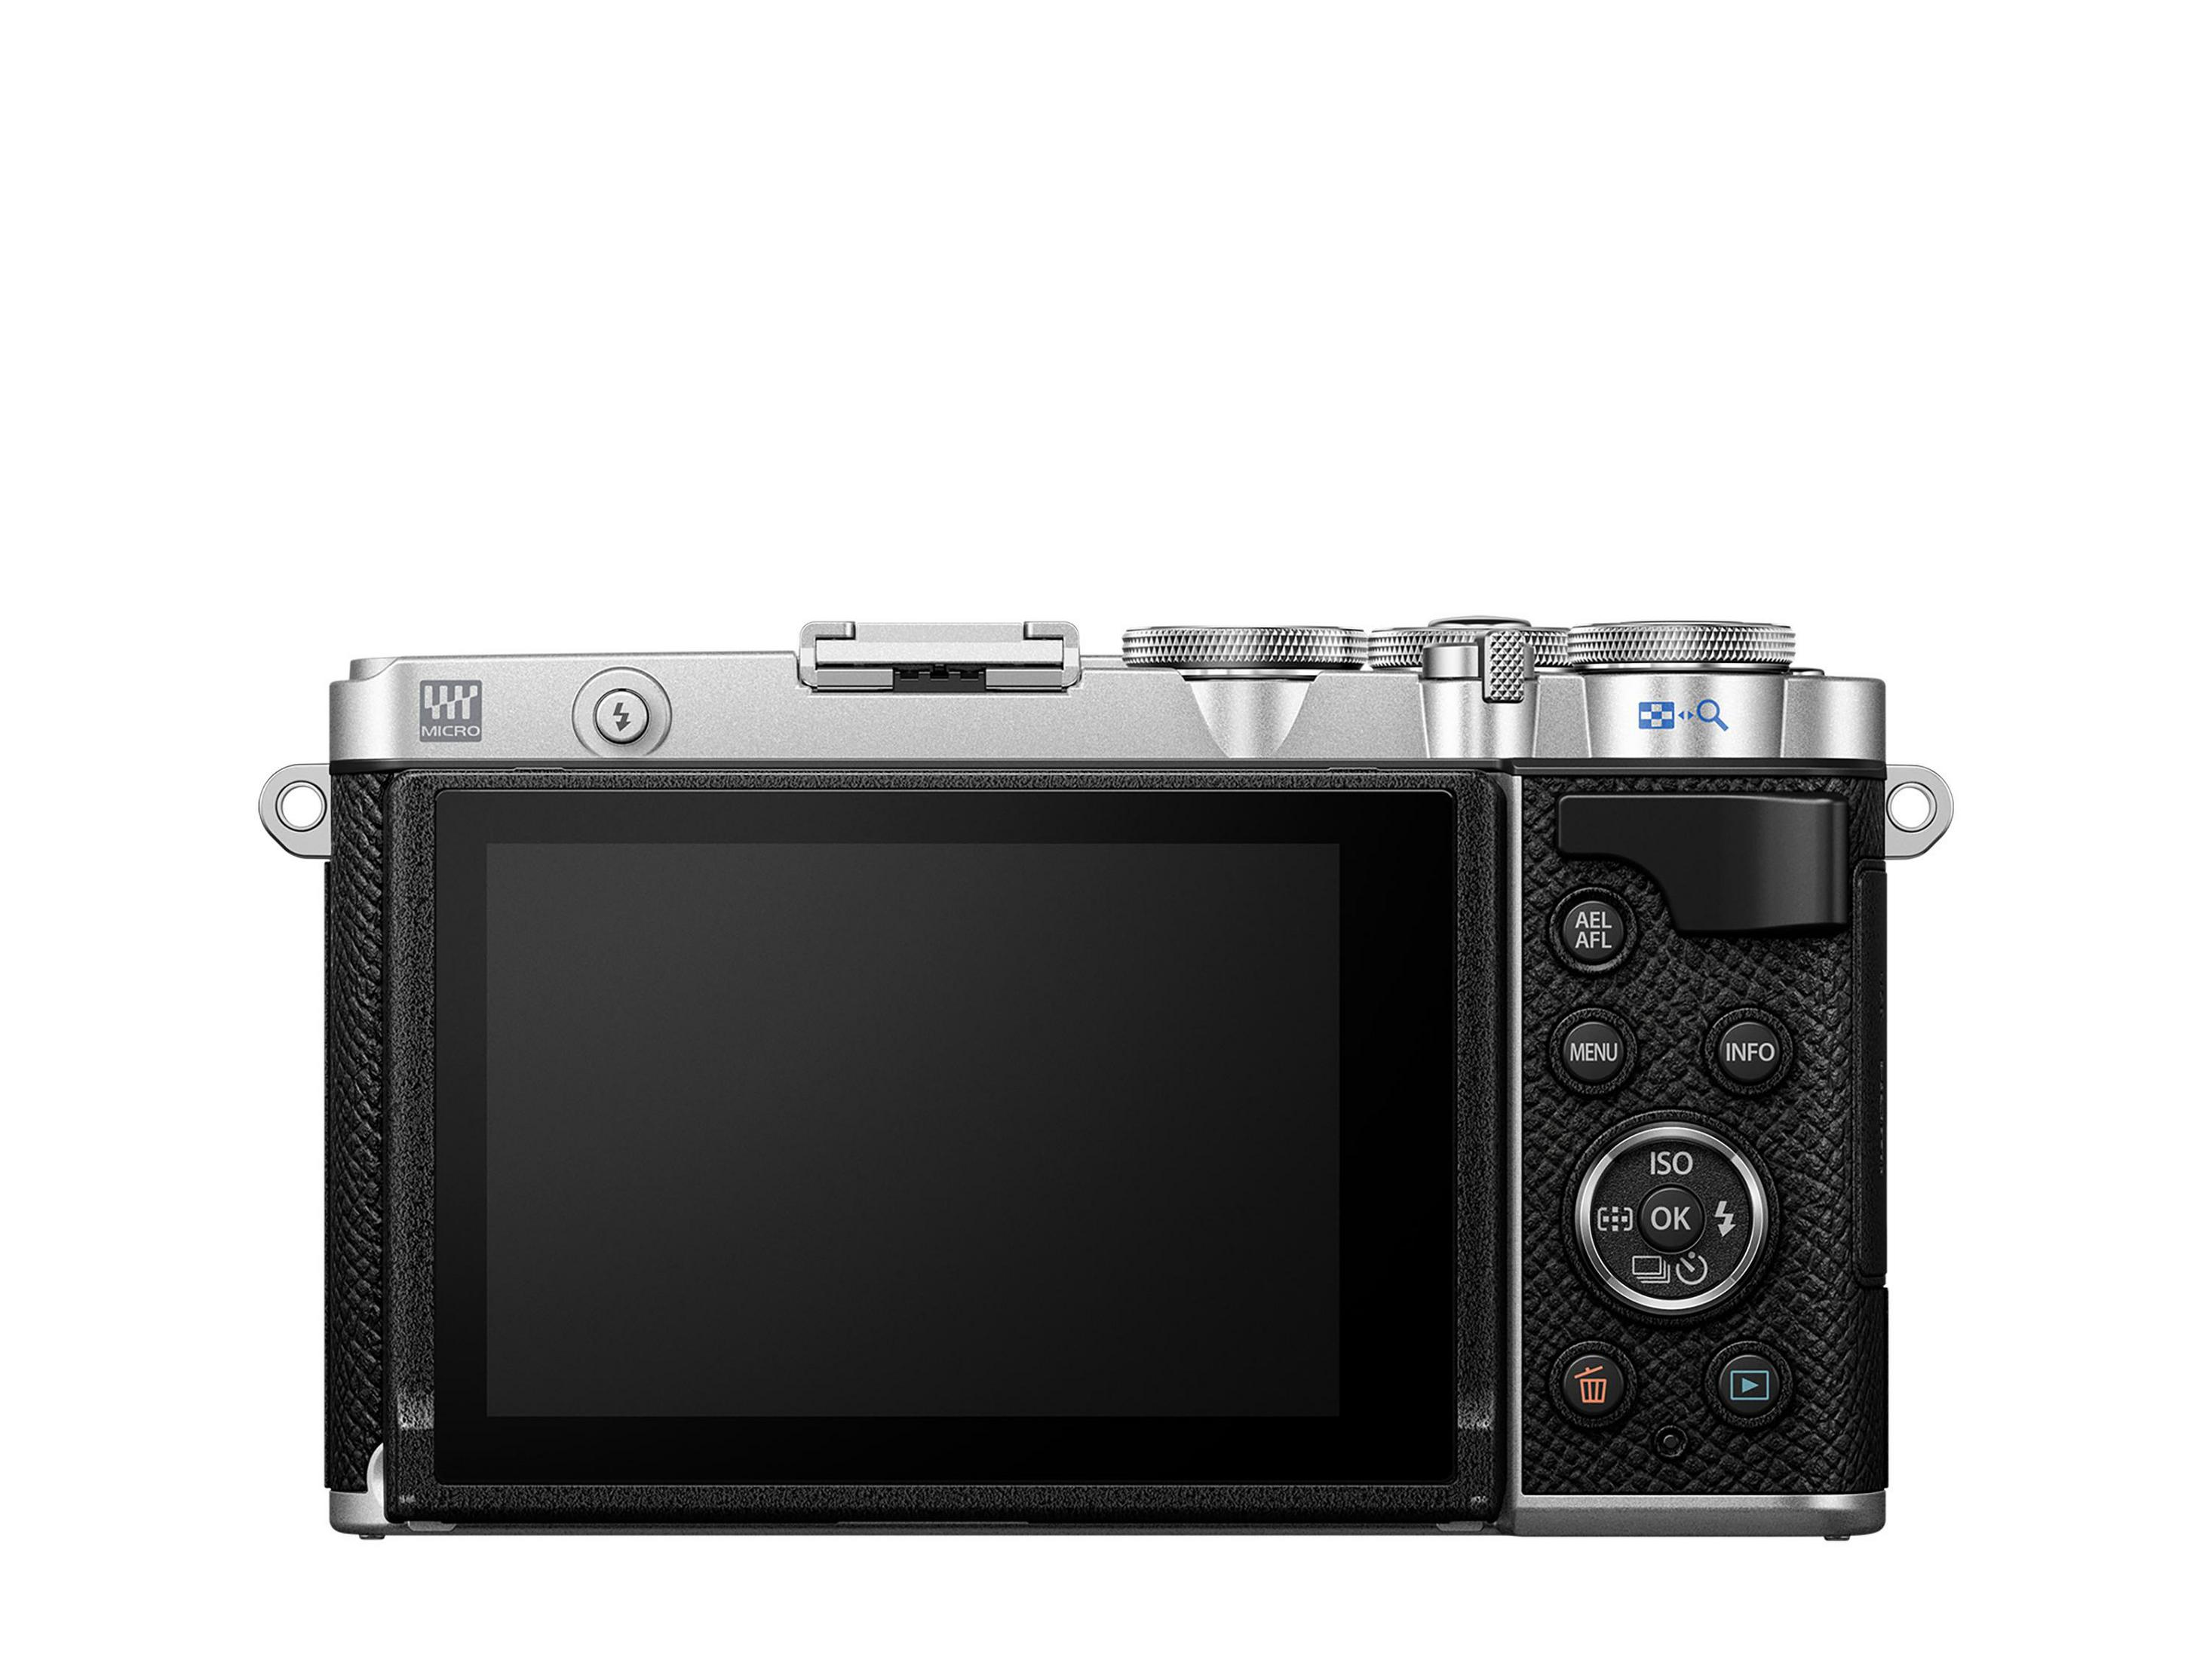 , 1442 SIL/SW 7,6 14-42 Systemkamera mit E-P 7 Touchscreen, Objektiv cm mm WLAN ZOOMKIT OLYMPUS Display PANCAKE